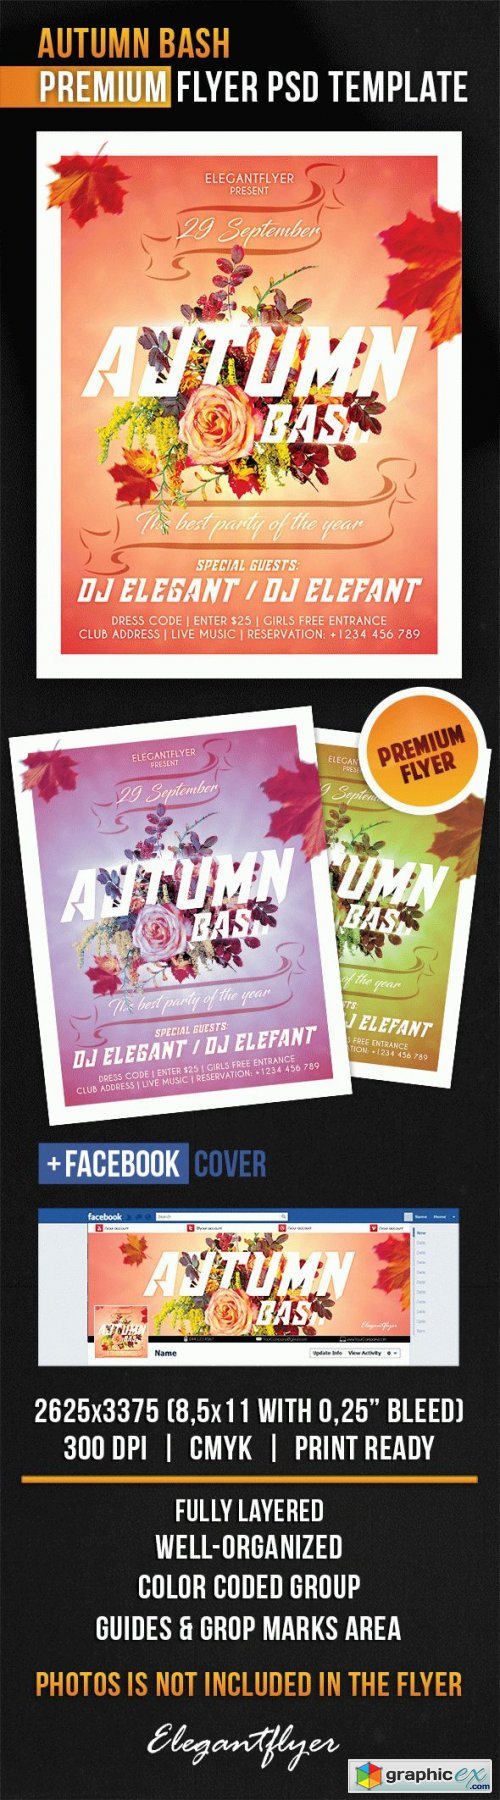 Autumn Bash V12 Flyer PSD Template + Facebook Cover